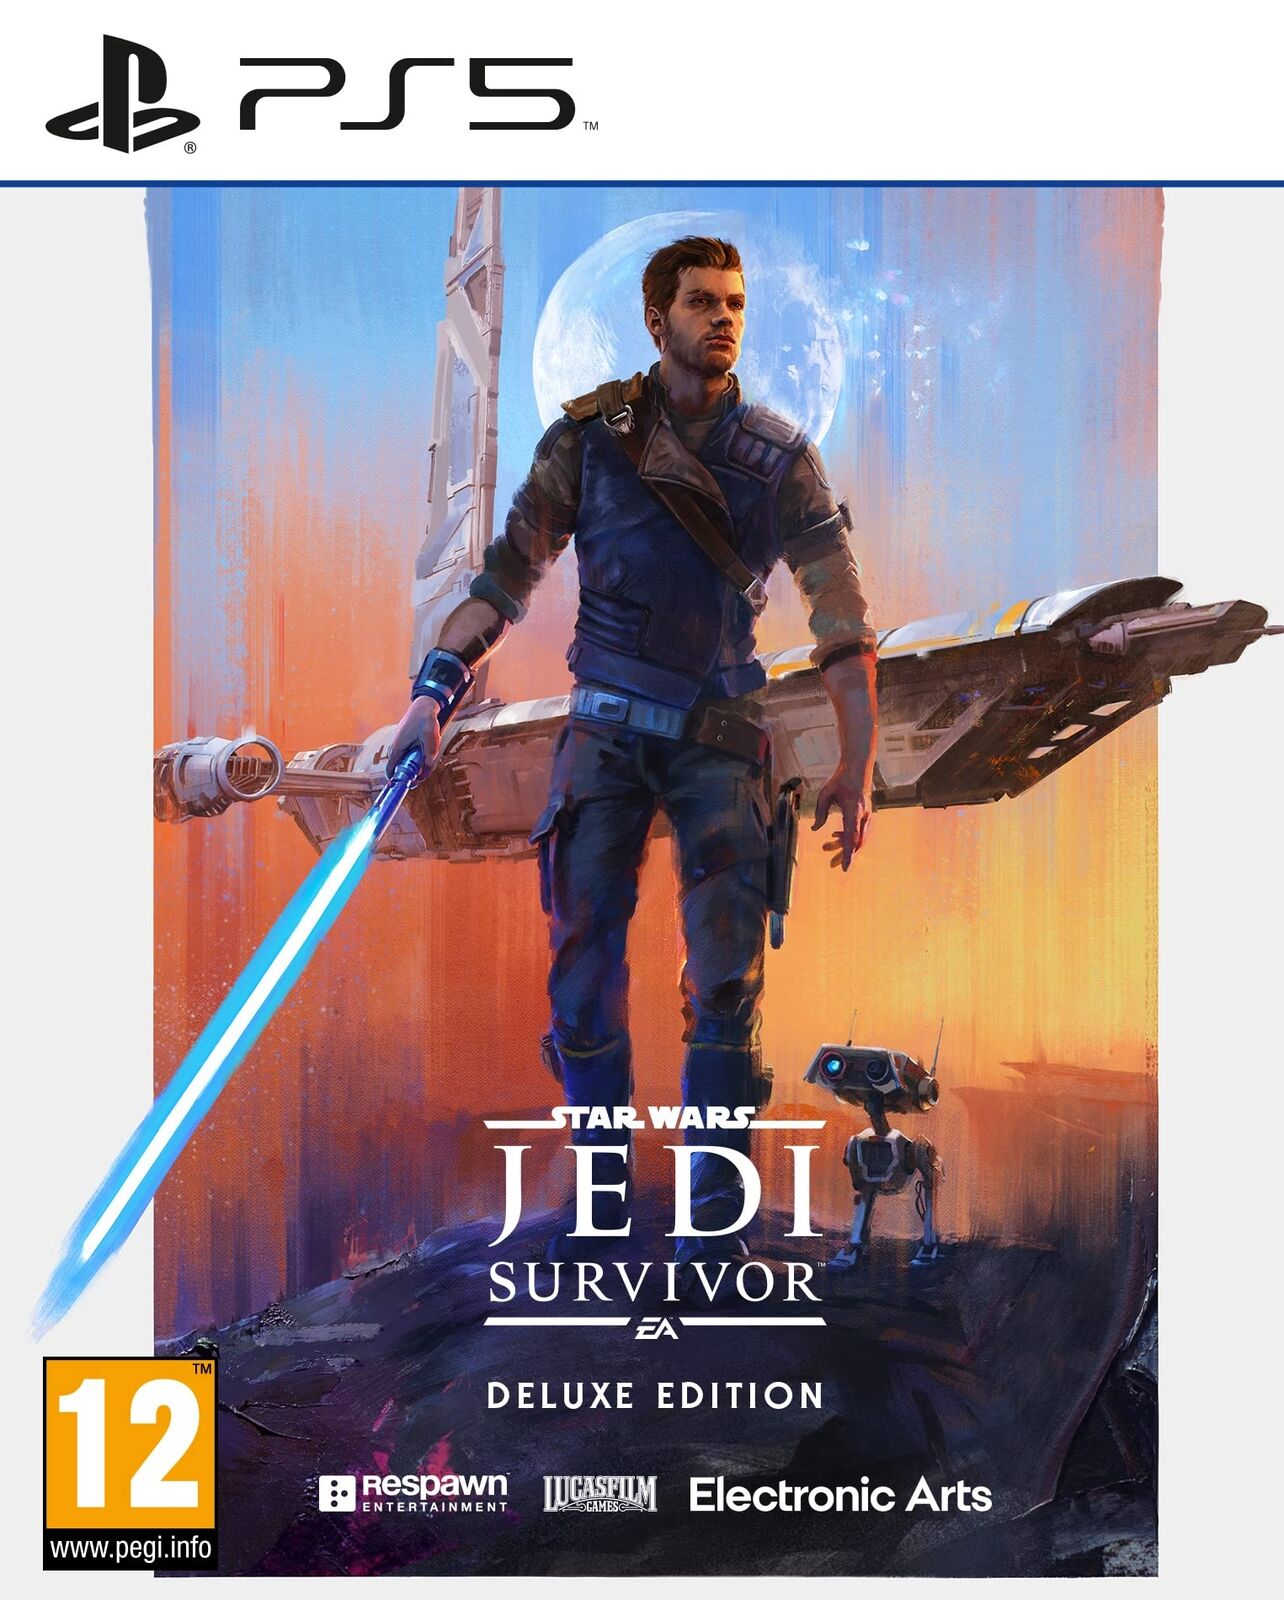 Star Wars Jedi: Survivor Deluxe Edition   PS5   VideoGame   (Sony Playstation 5)